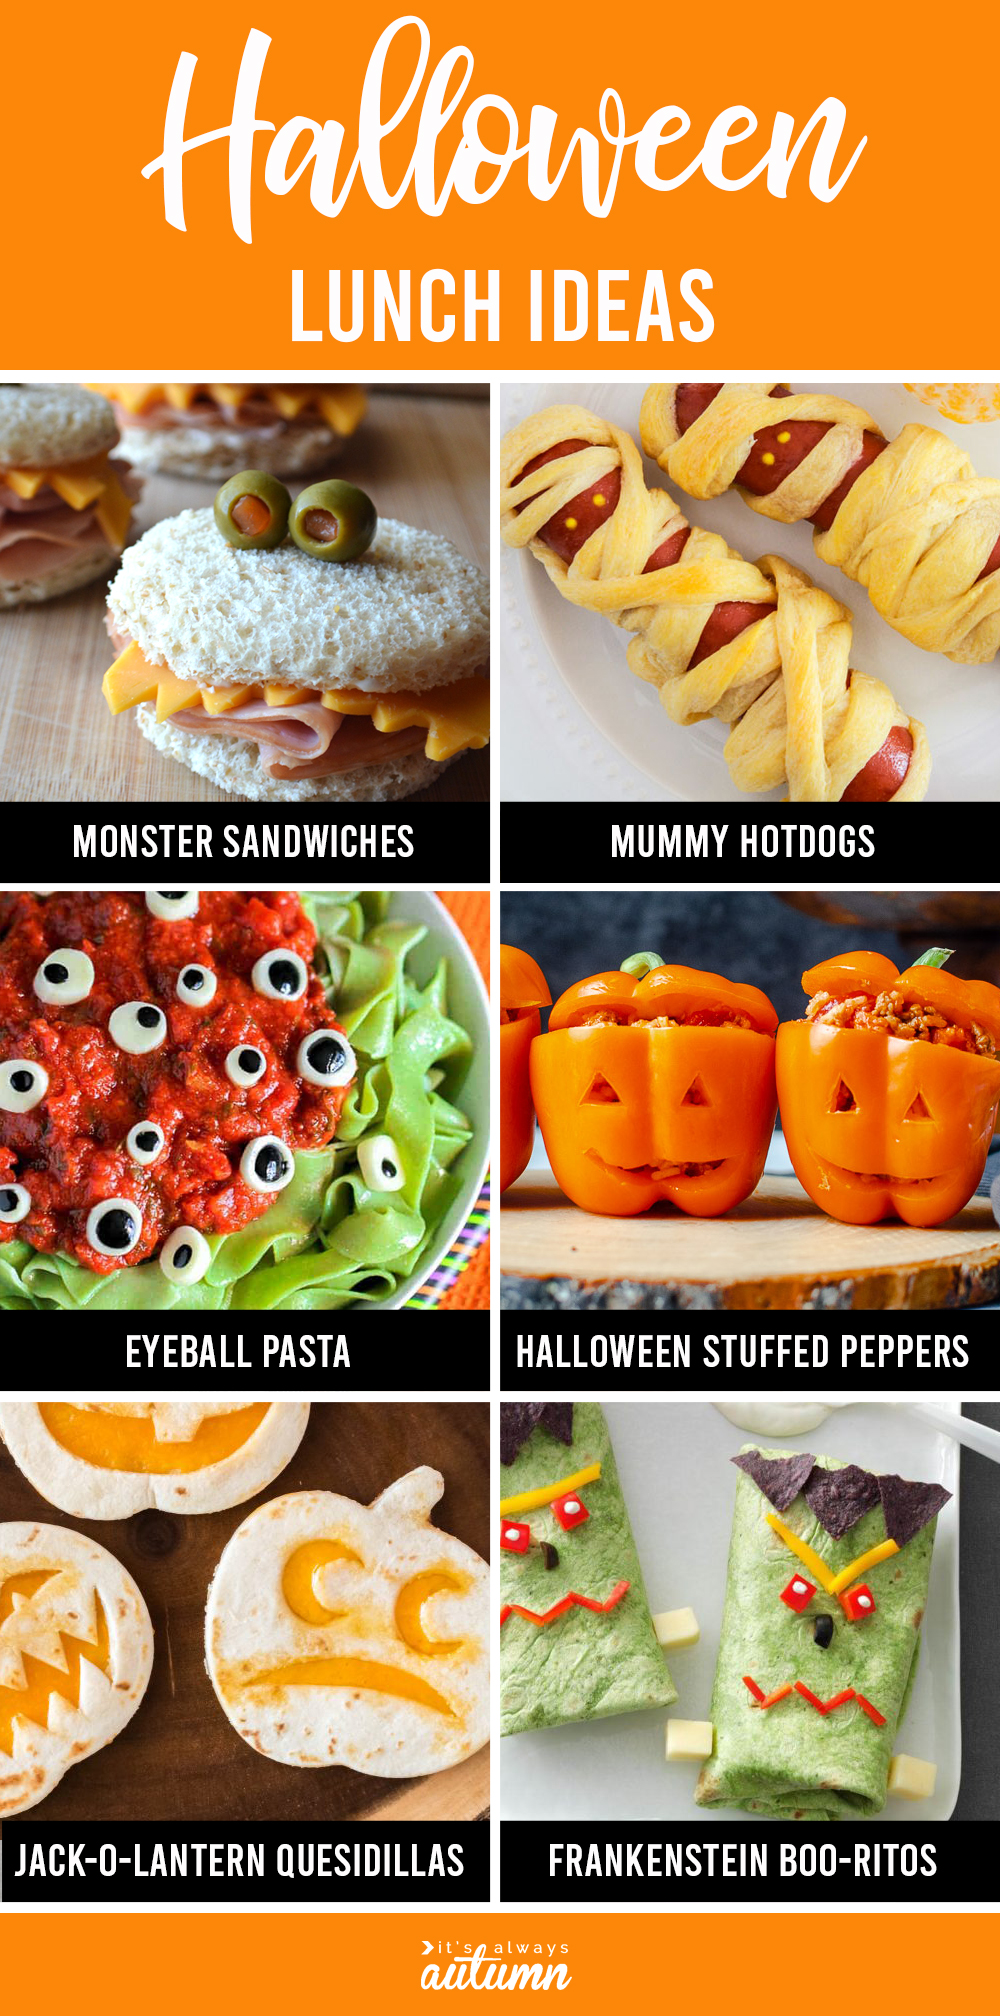 Halloween lunch ideas